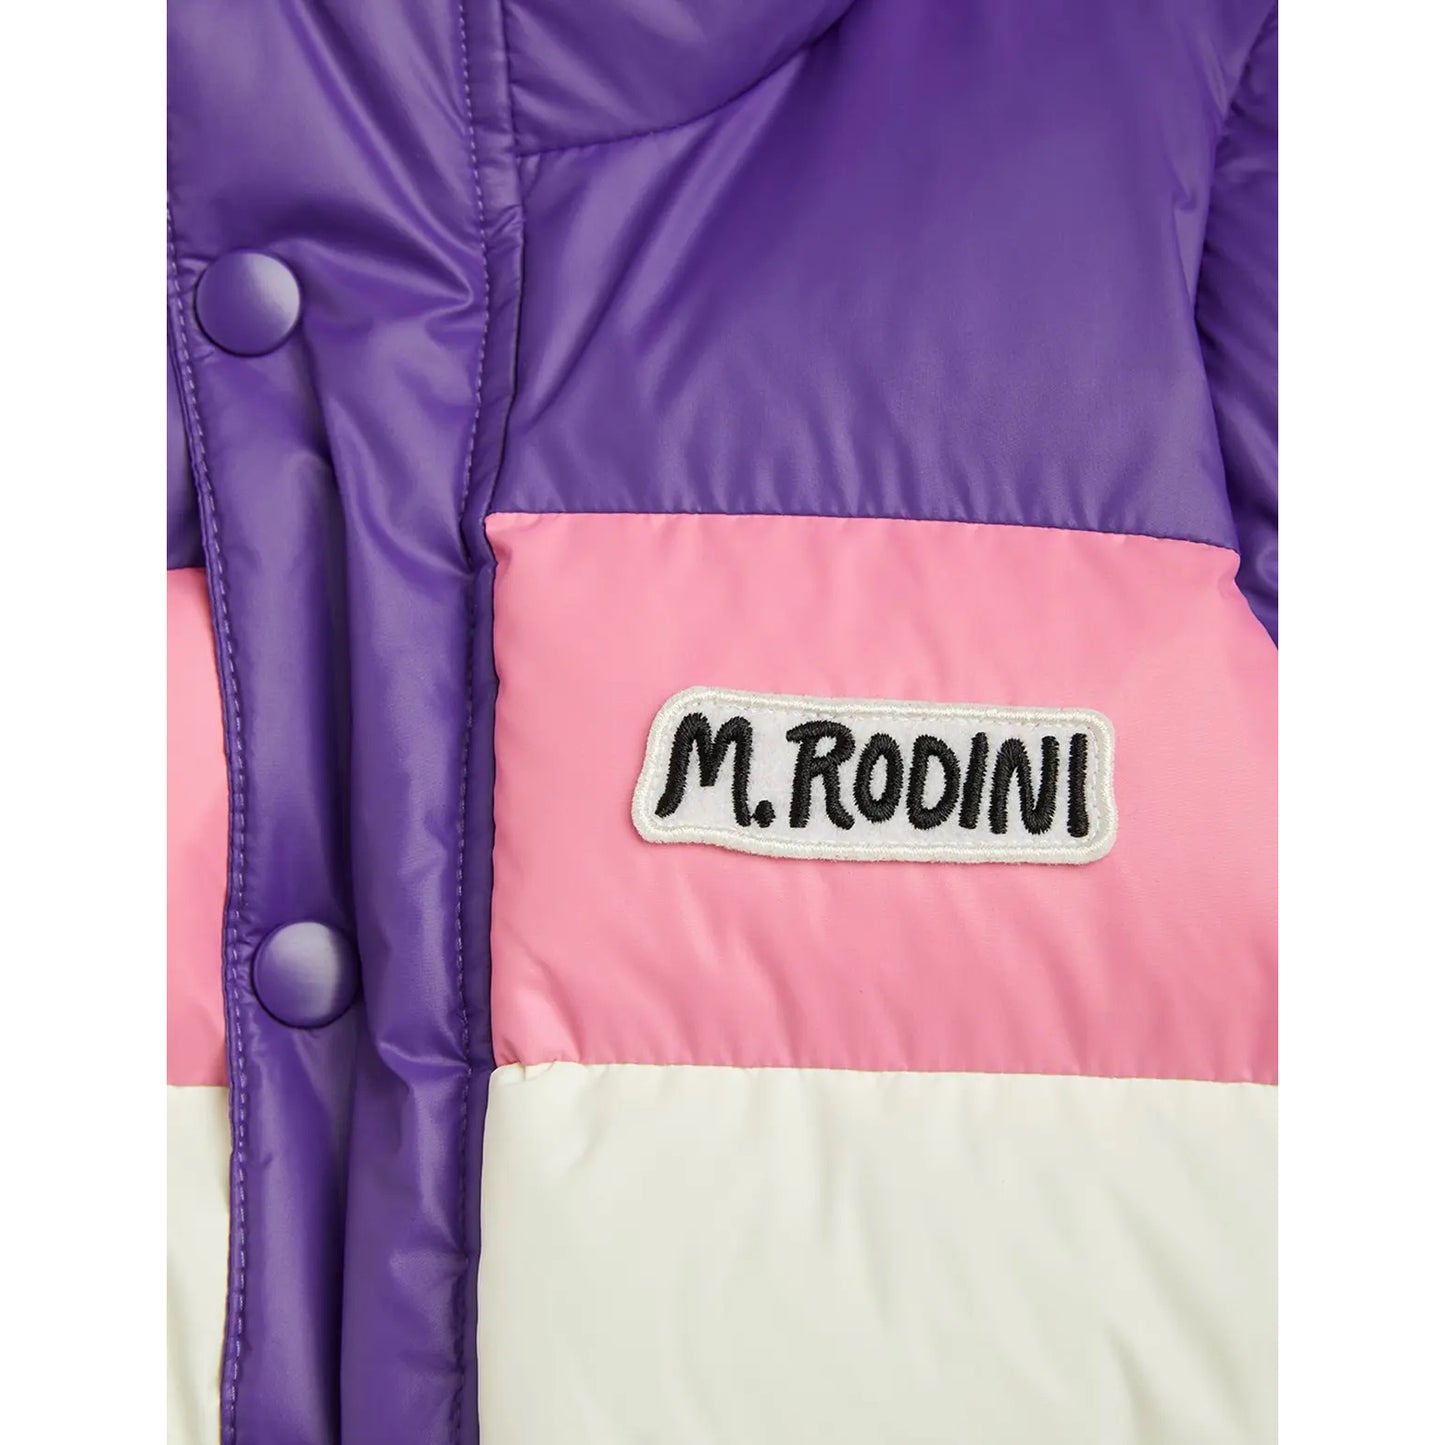 MINI RODINI Zipper Sleeve Puffer Jacket Purple ALWAYS SHOW